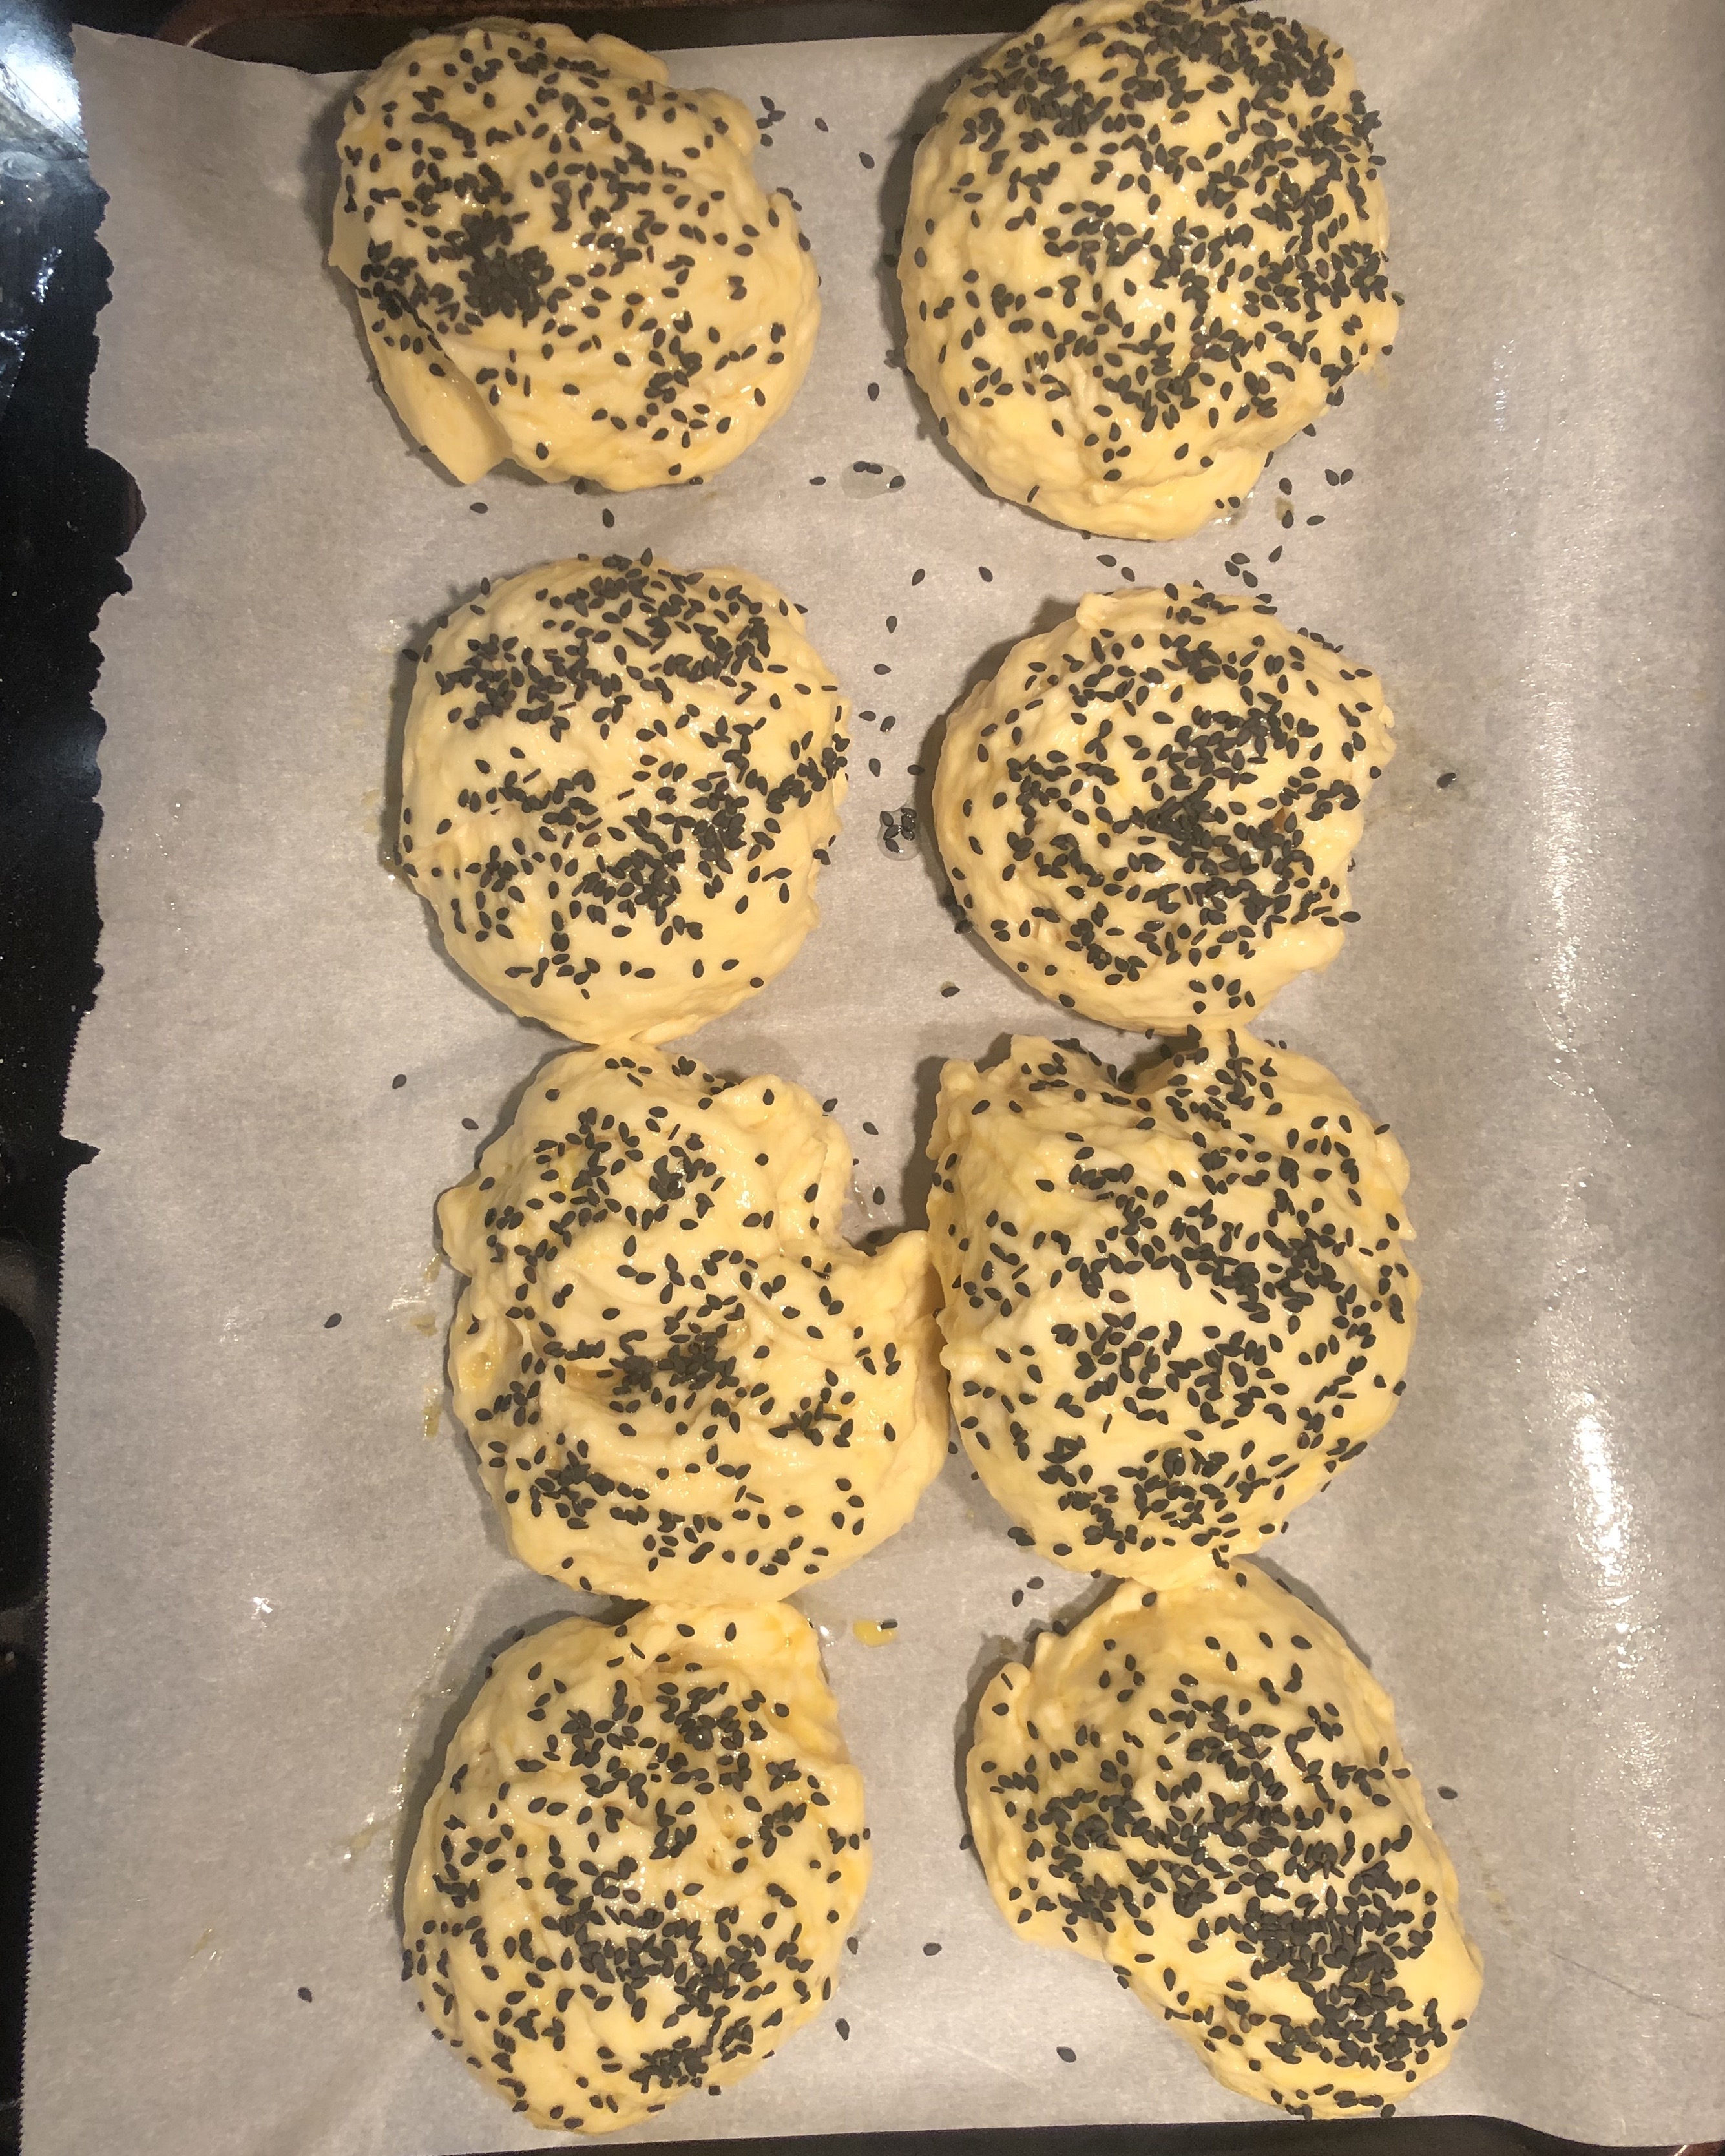 Brioche bun doughs with black sesame seeds